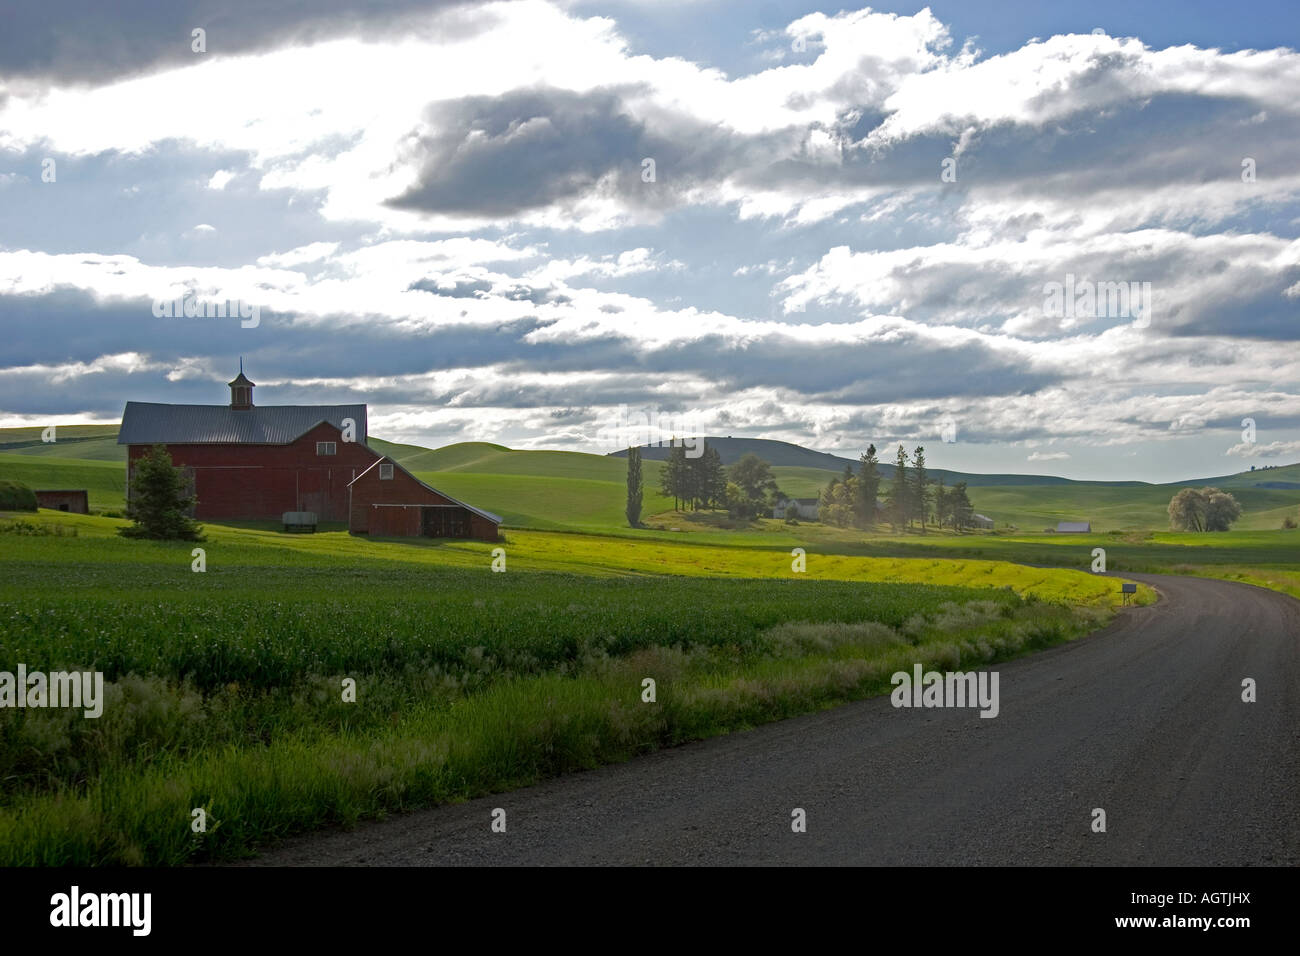 Red barn and green unripe wheat fields near Moscow Idaho Stock Photo